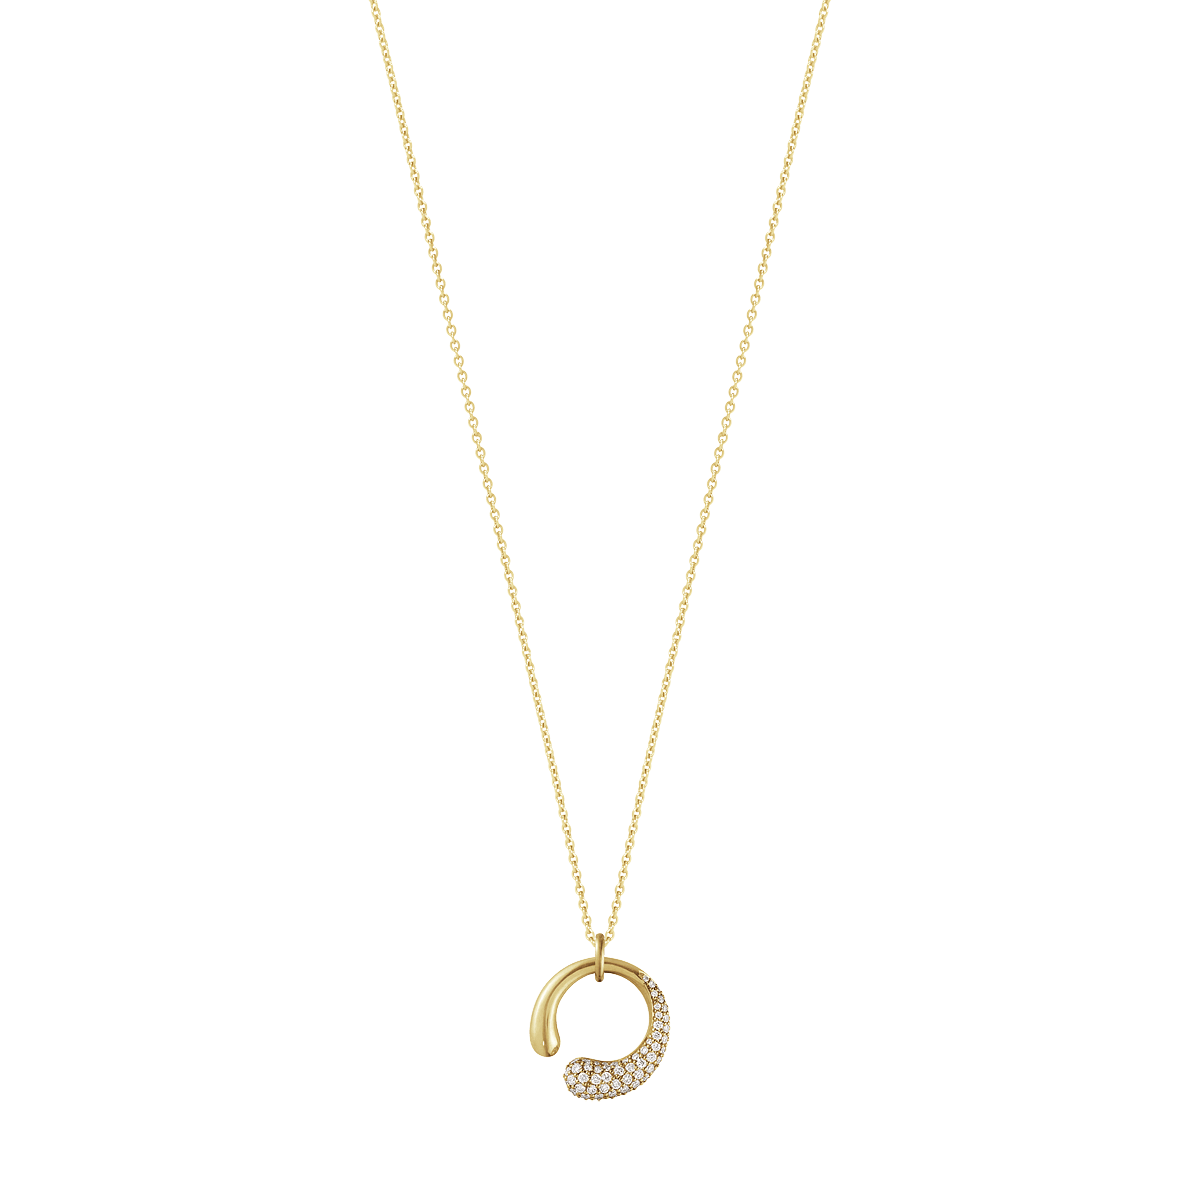 georg jensen 18ct yellow gold mercy pendant with pave diamonds 10017828